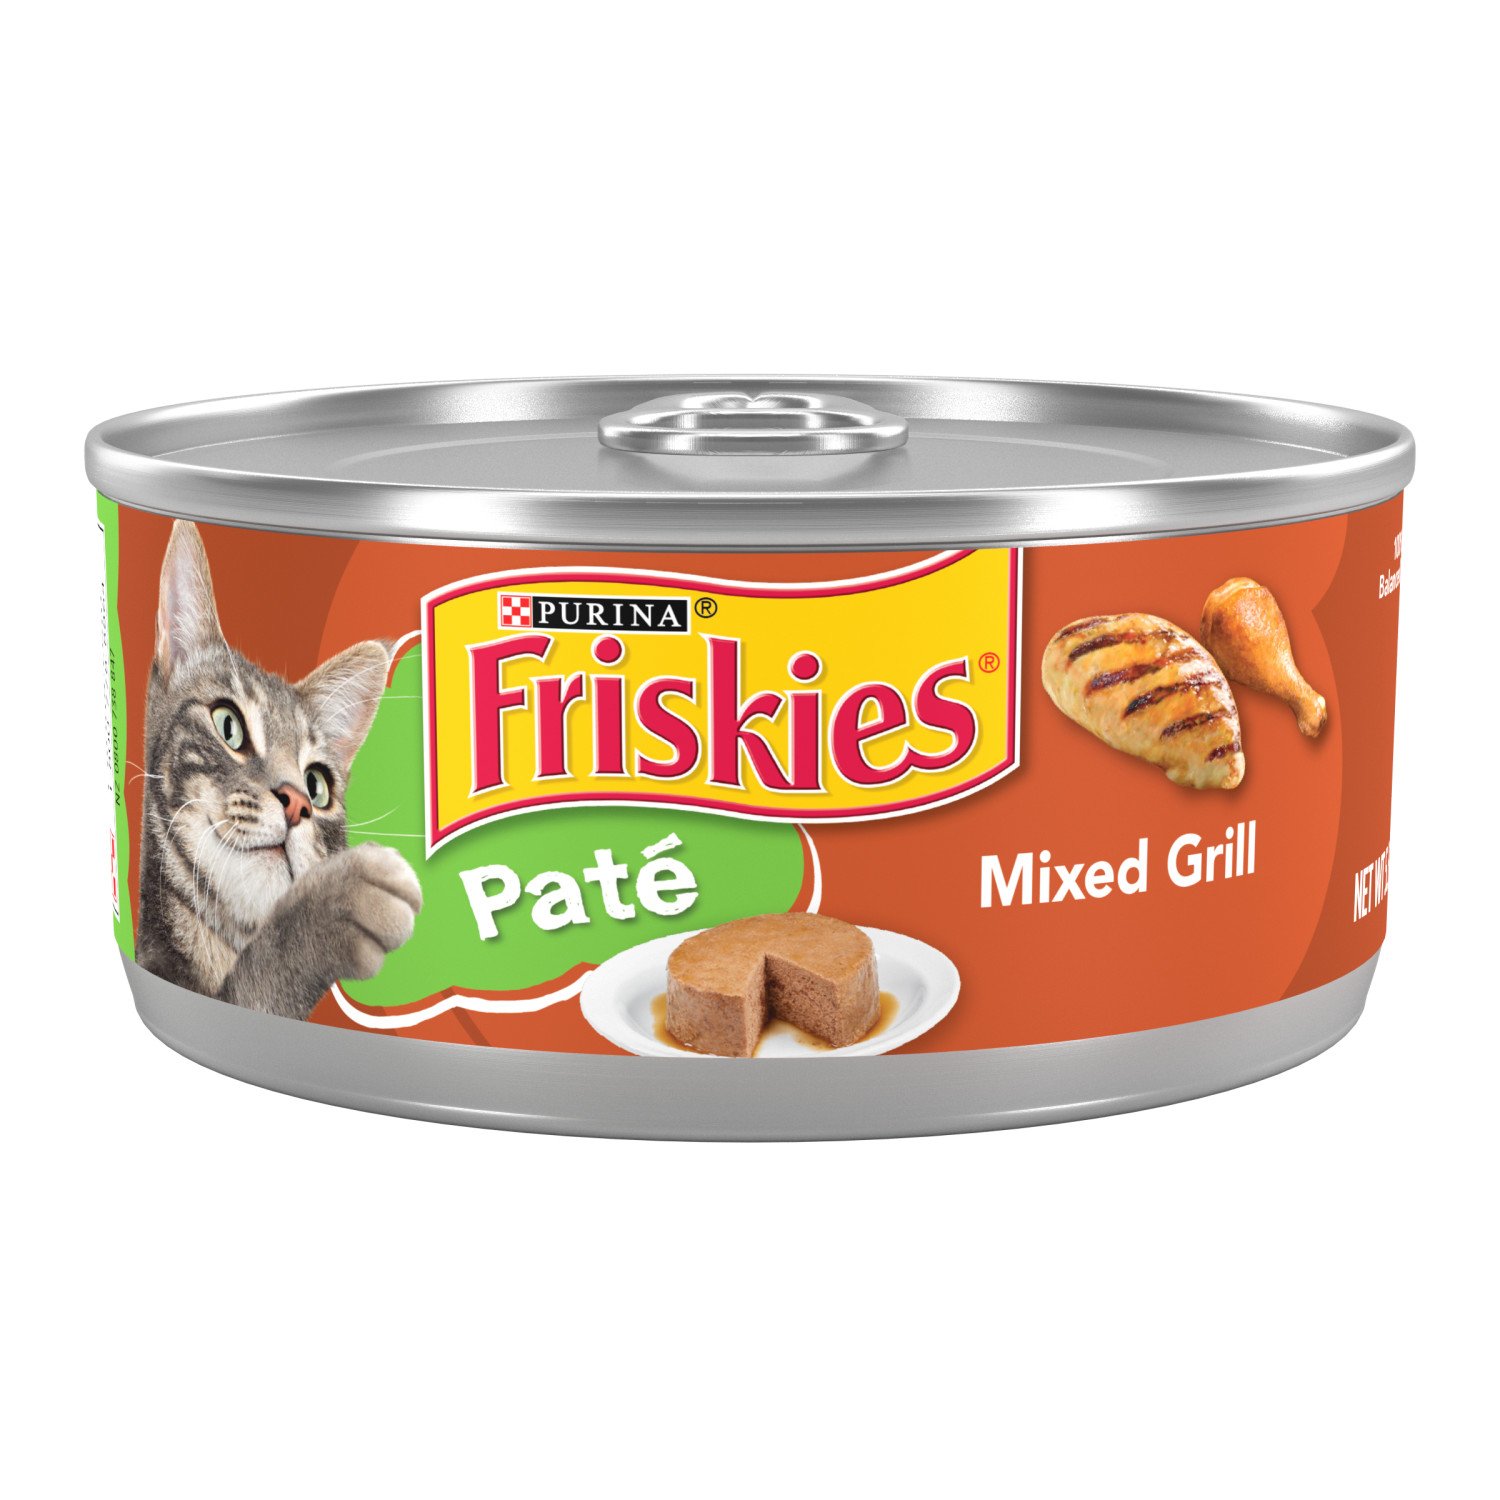 Purina Friskies Pate Mixed Grill Wet Cat Food - Shop Cats at H-E-B